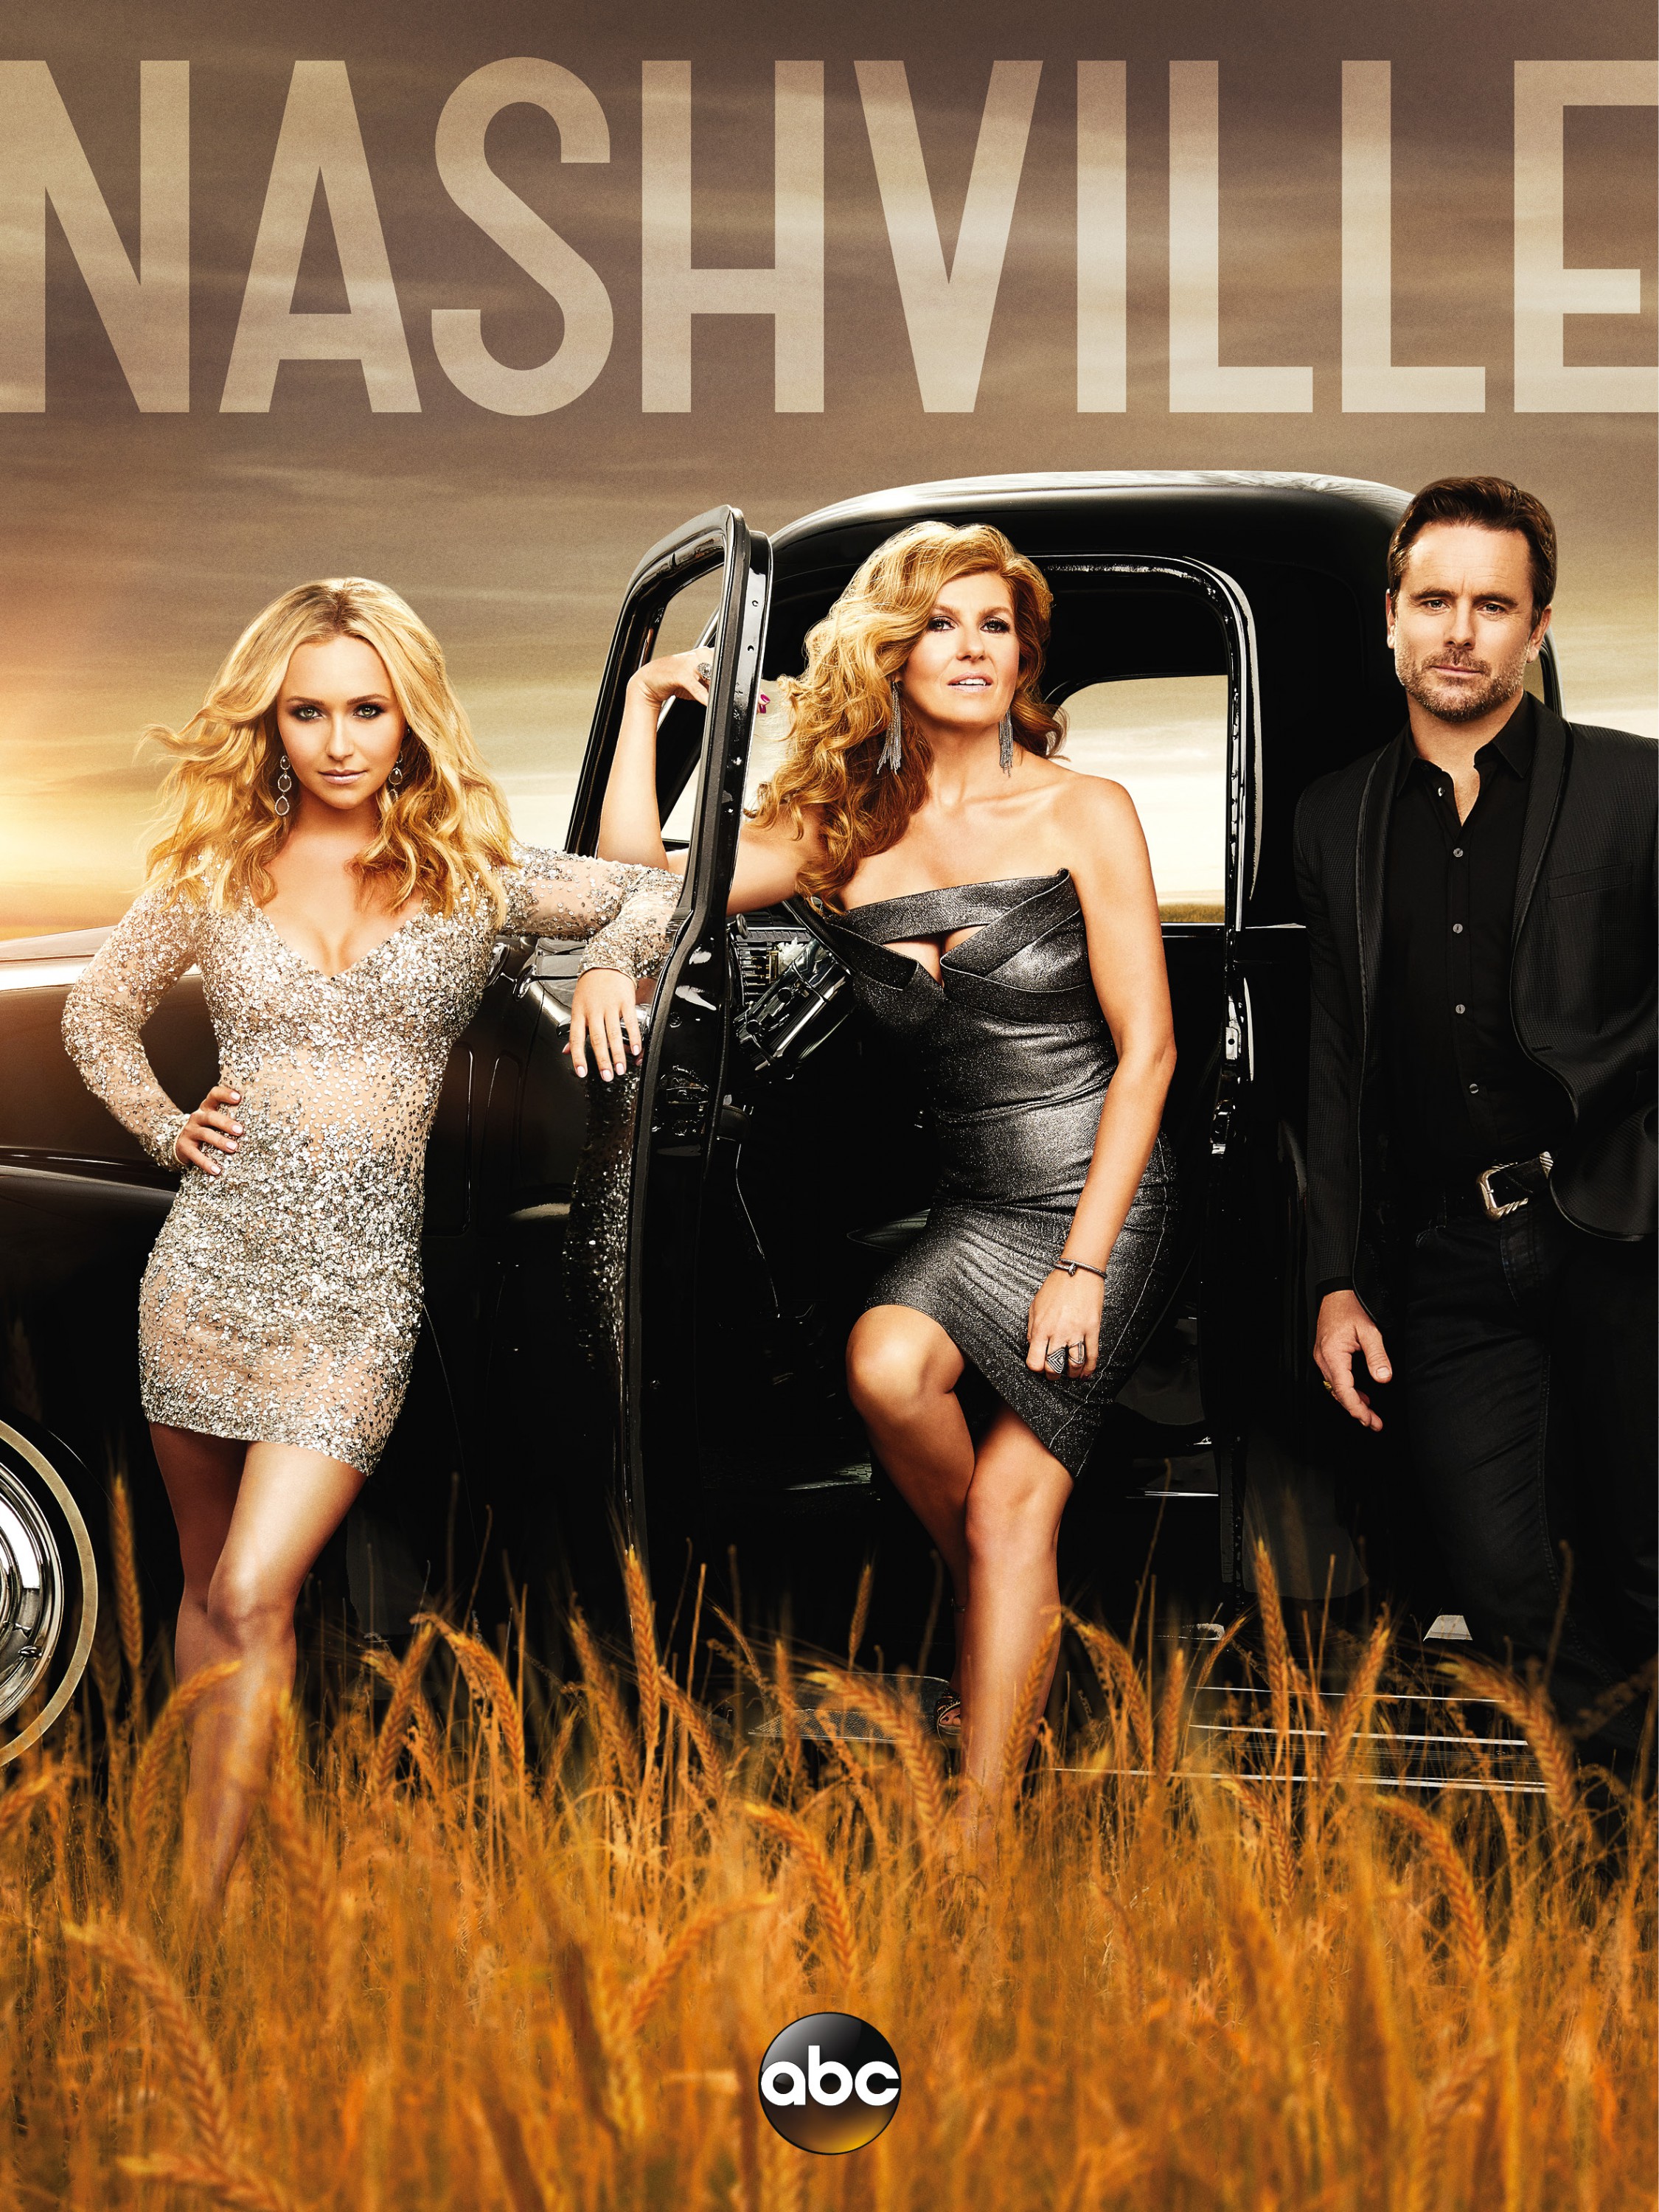 Mega Sized Movie Poster Image for Nashville (#4 of 5)